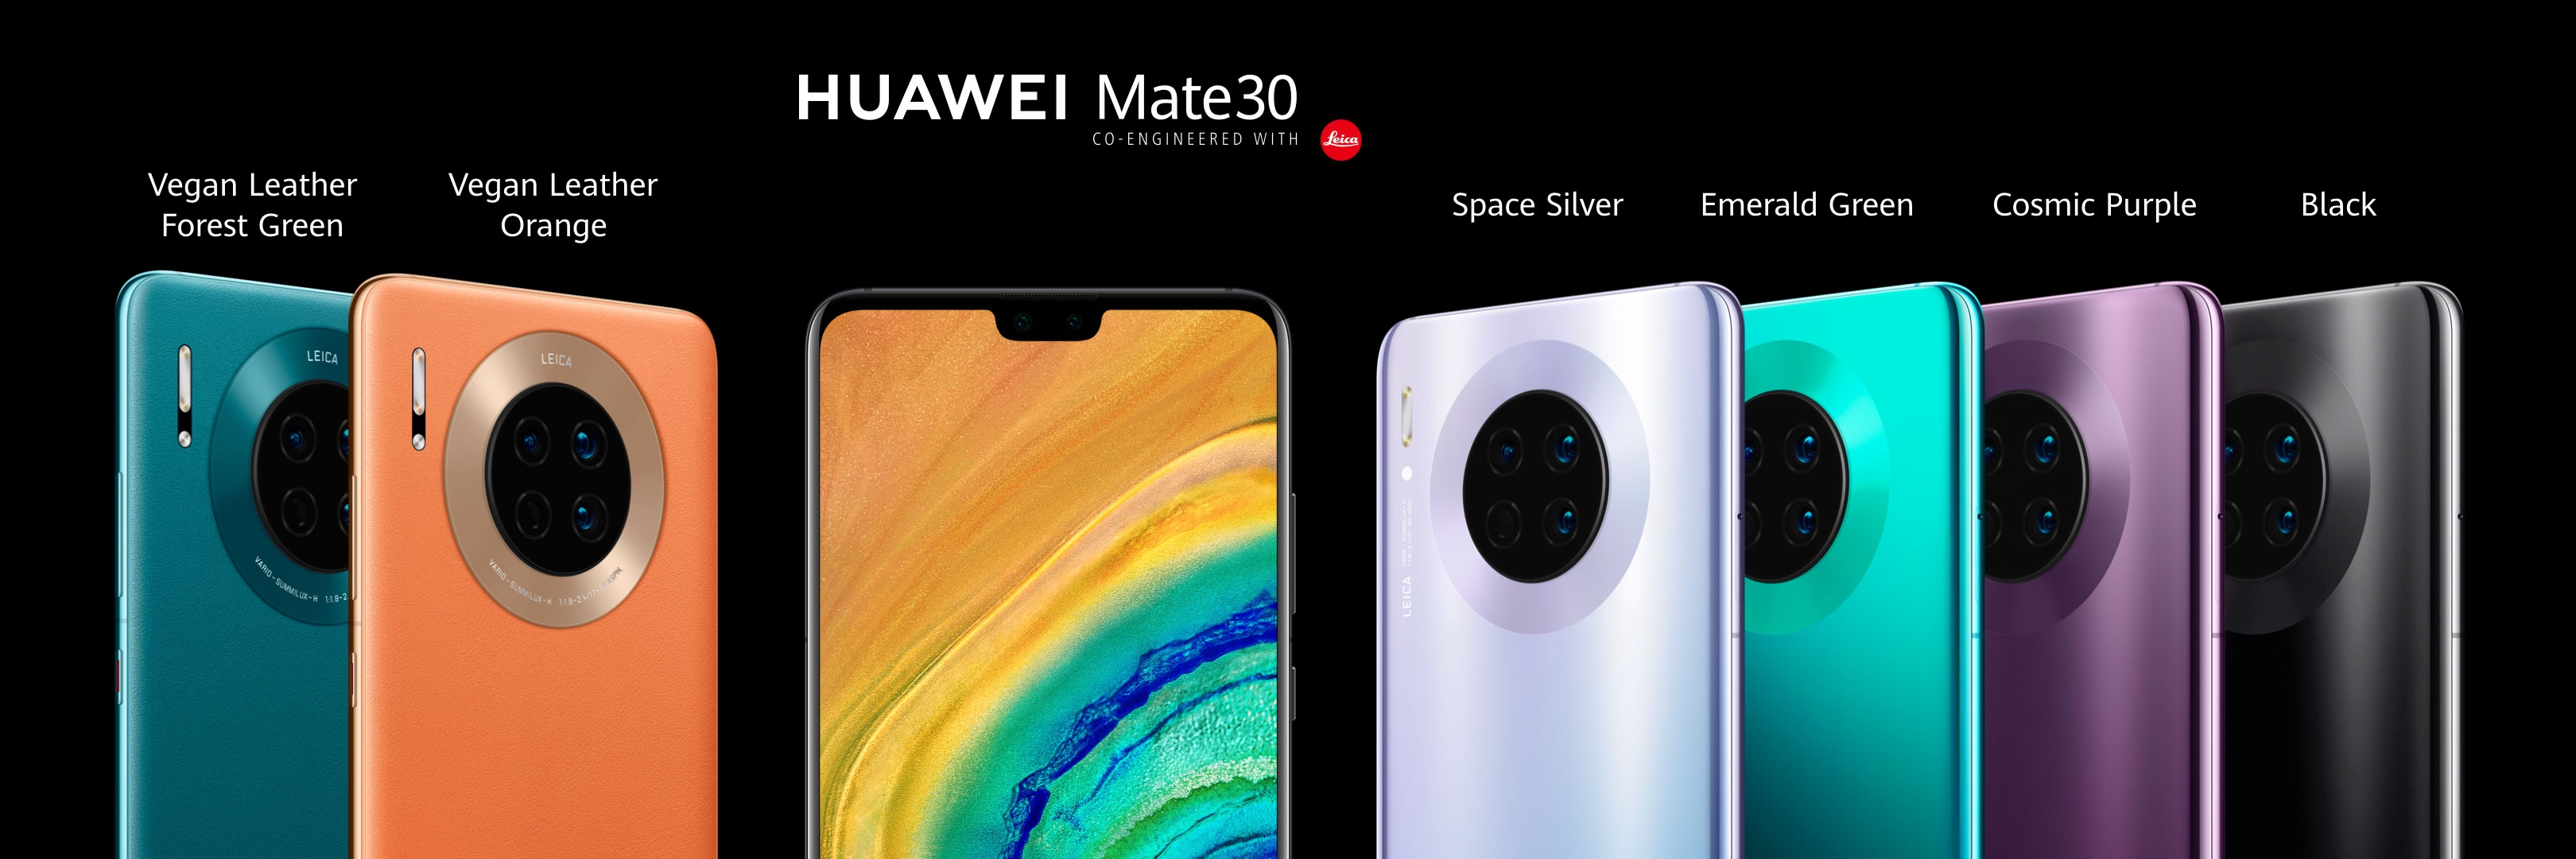 Представлены смартфоны Huawei Mate 30 и Huawei Mate 30 Pro